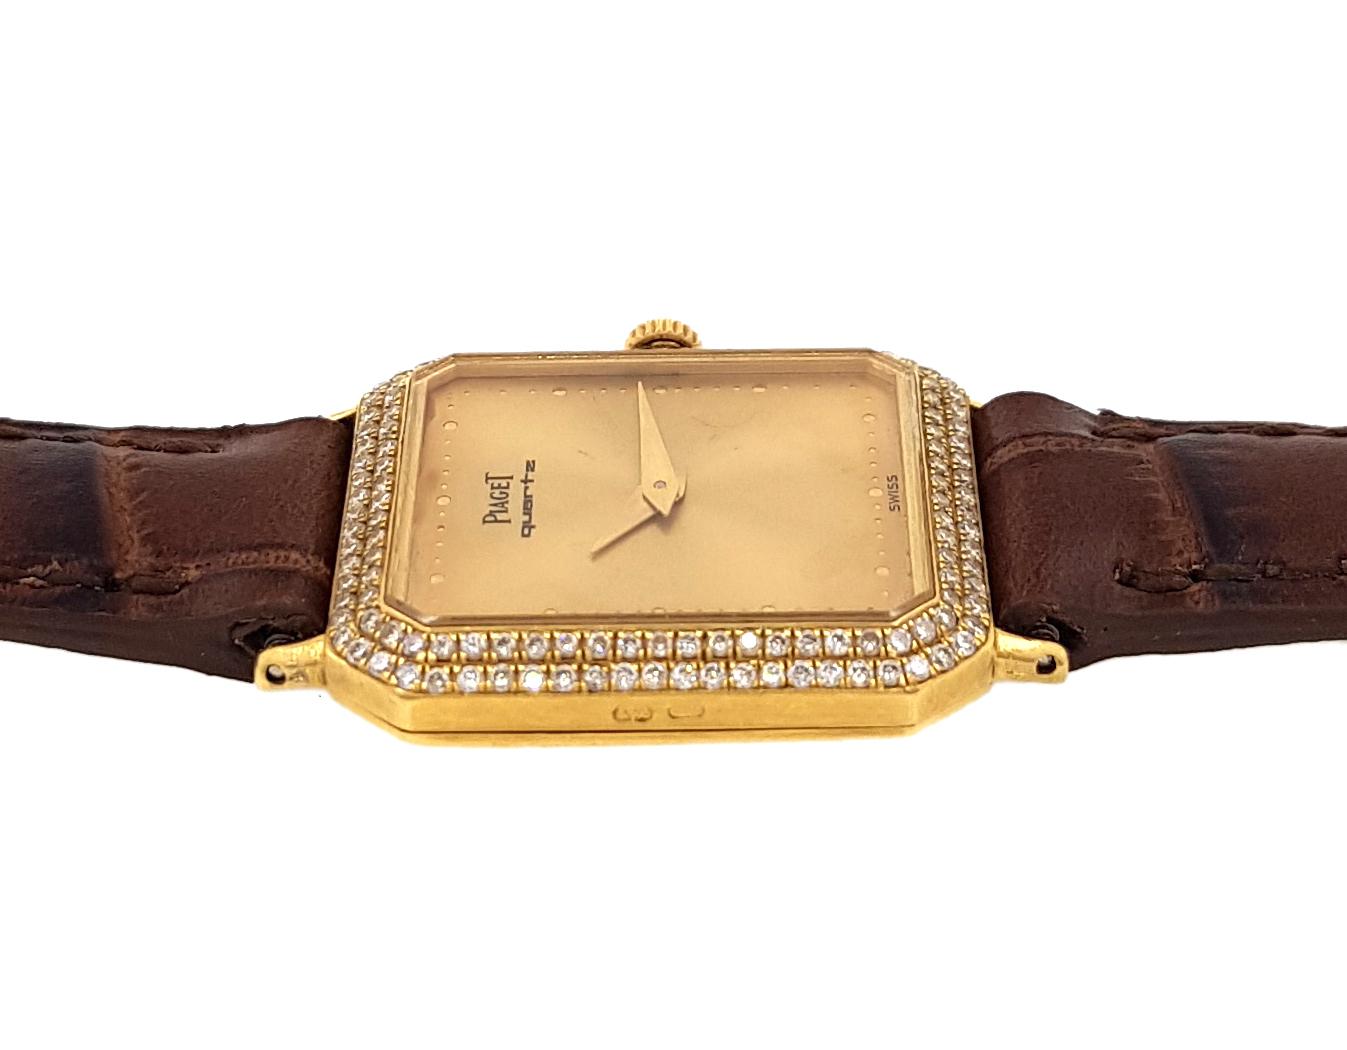 Brilliant Cut Piaget Classic Cocktail 18k 750 Factory Set Diamonds Solid Gold Watch Ref 8148 For Sale